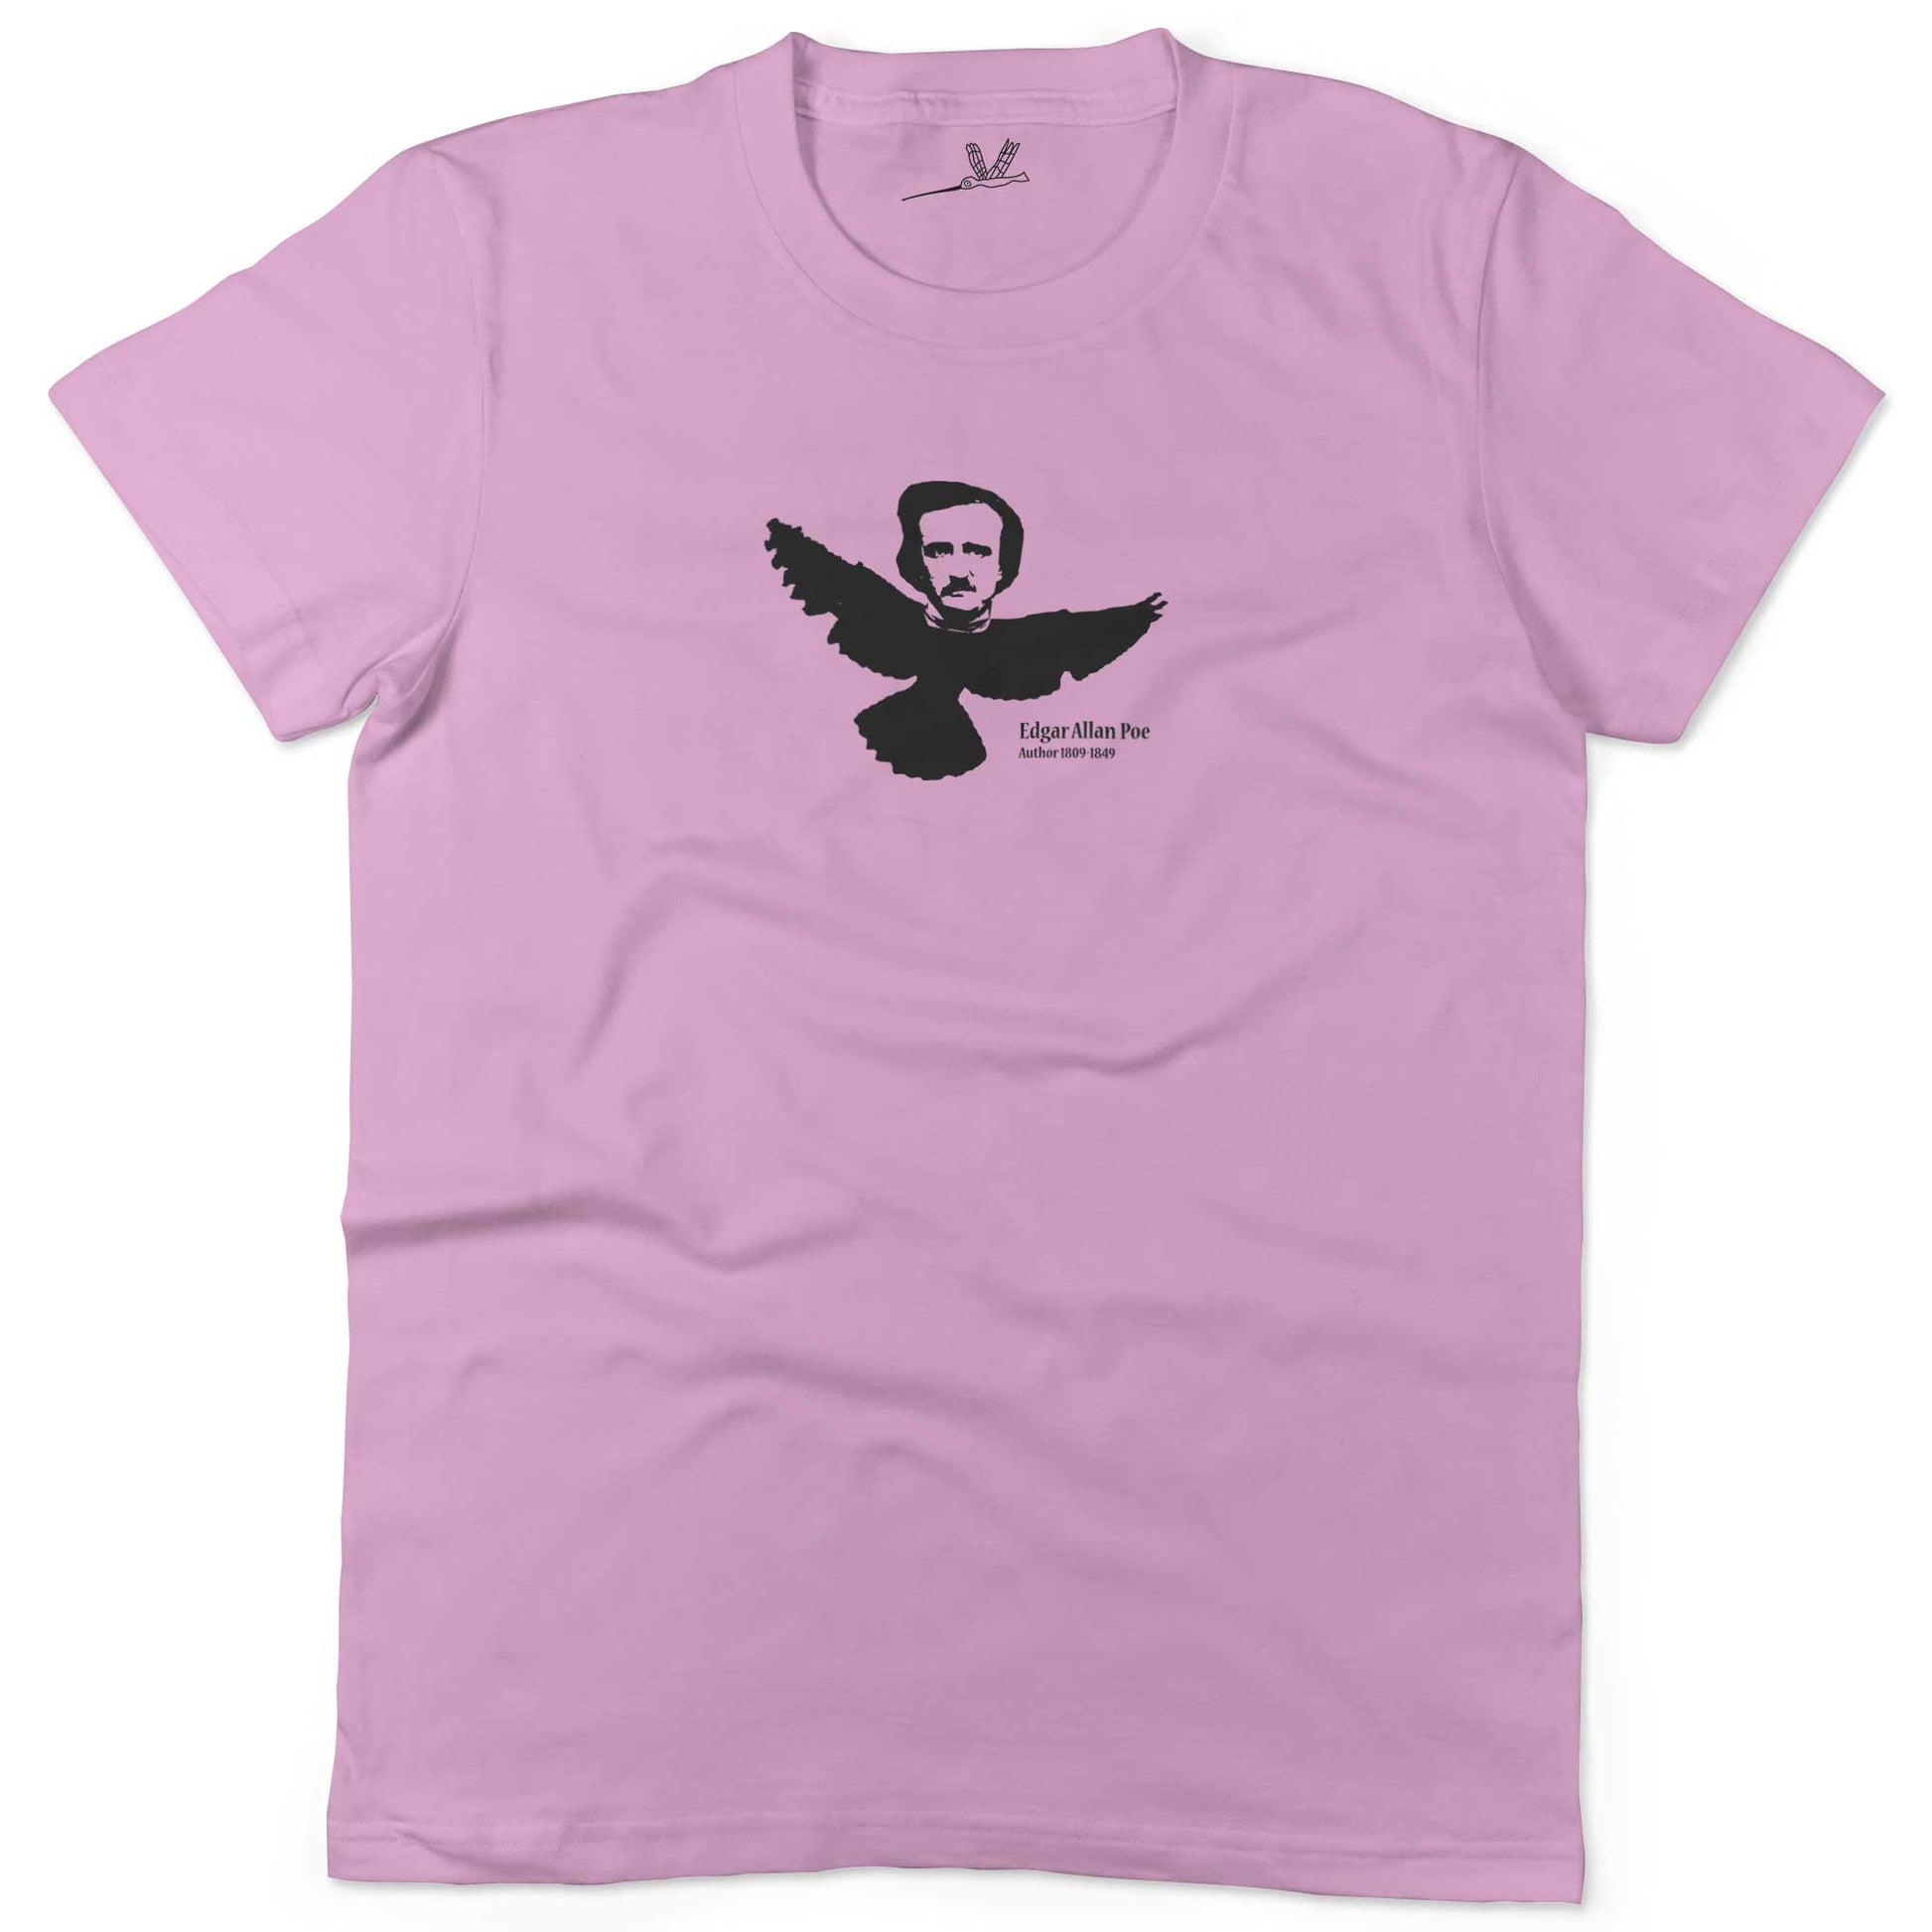 Edgar Allan Poe Unisex Or Women's Cotton T-shirt-Pink-Woman